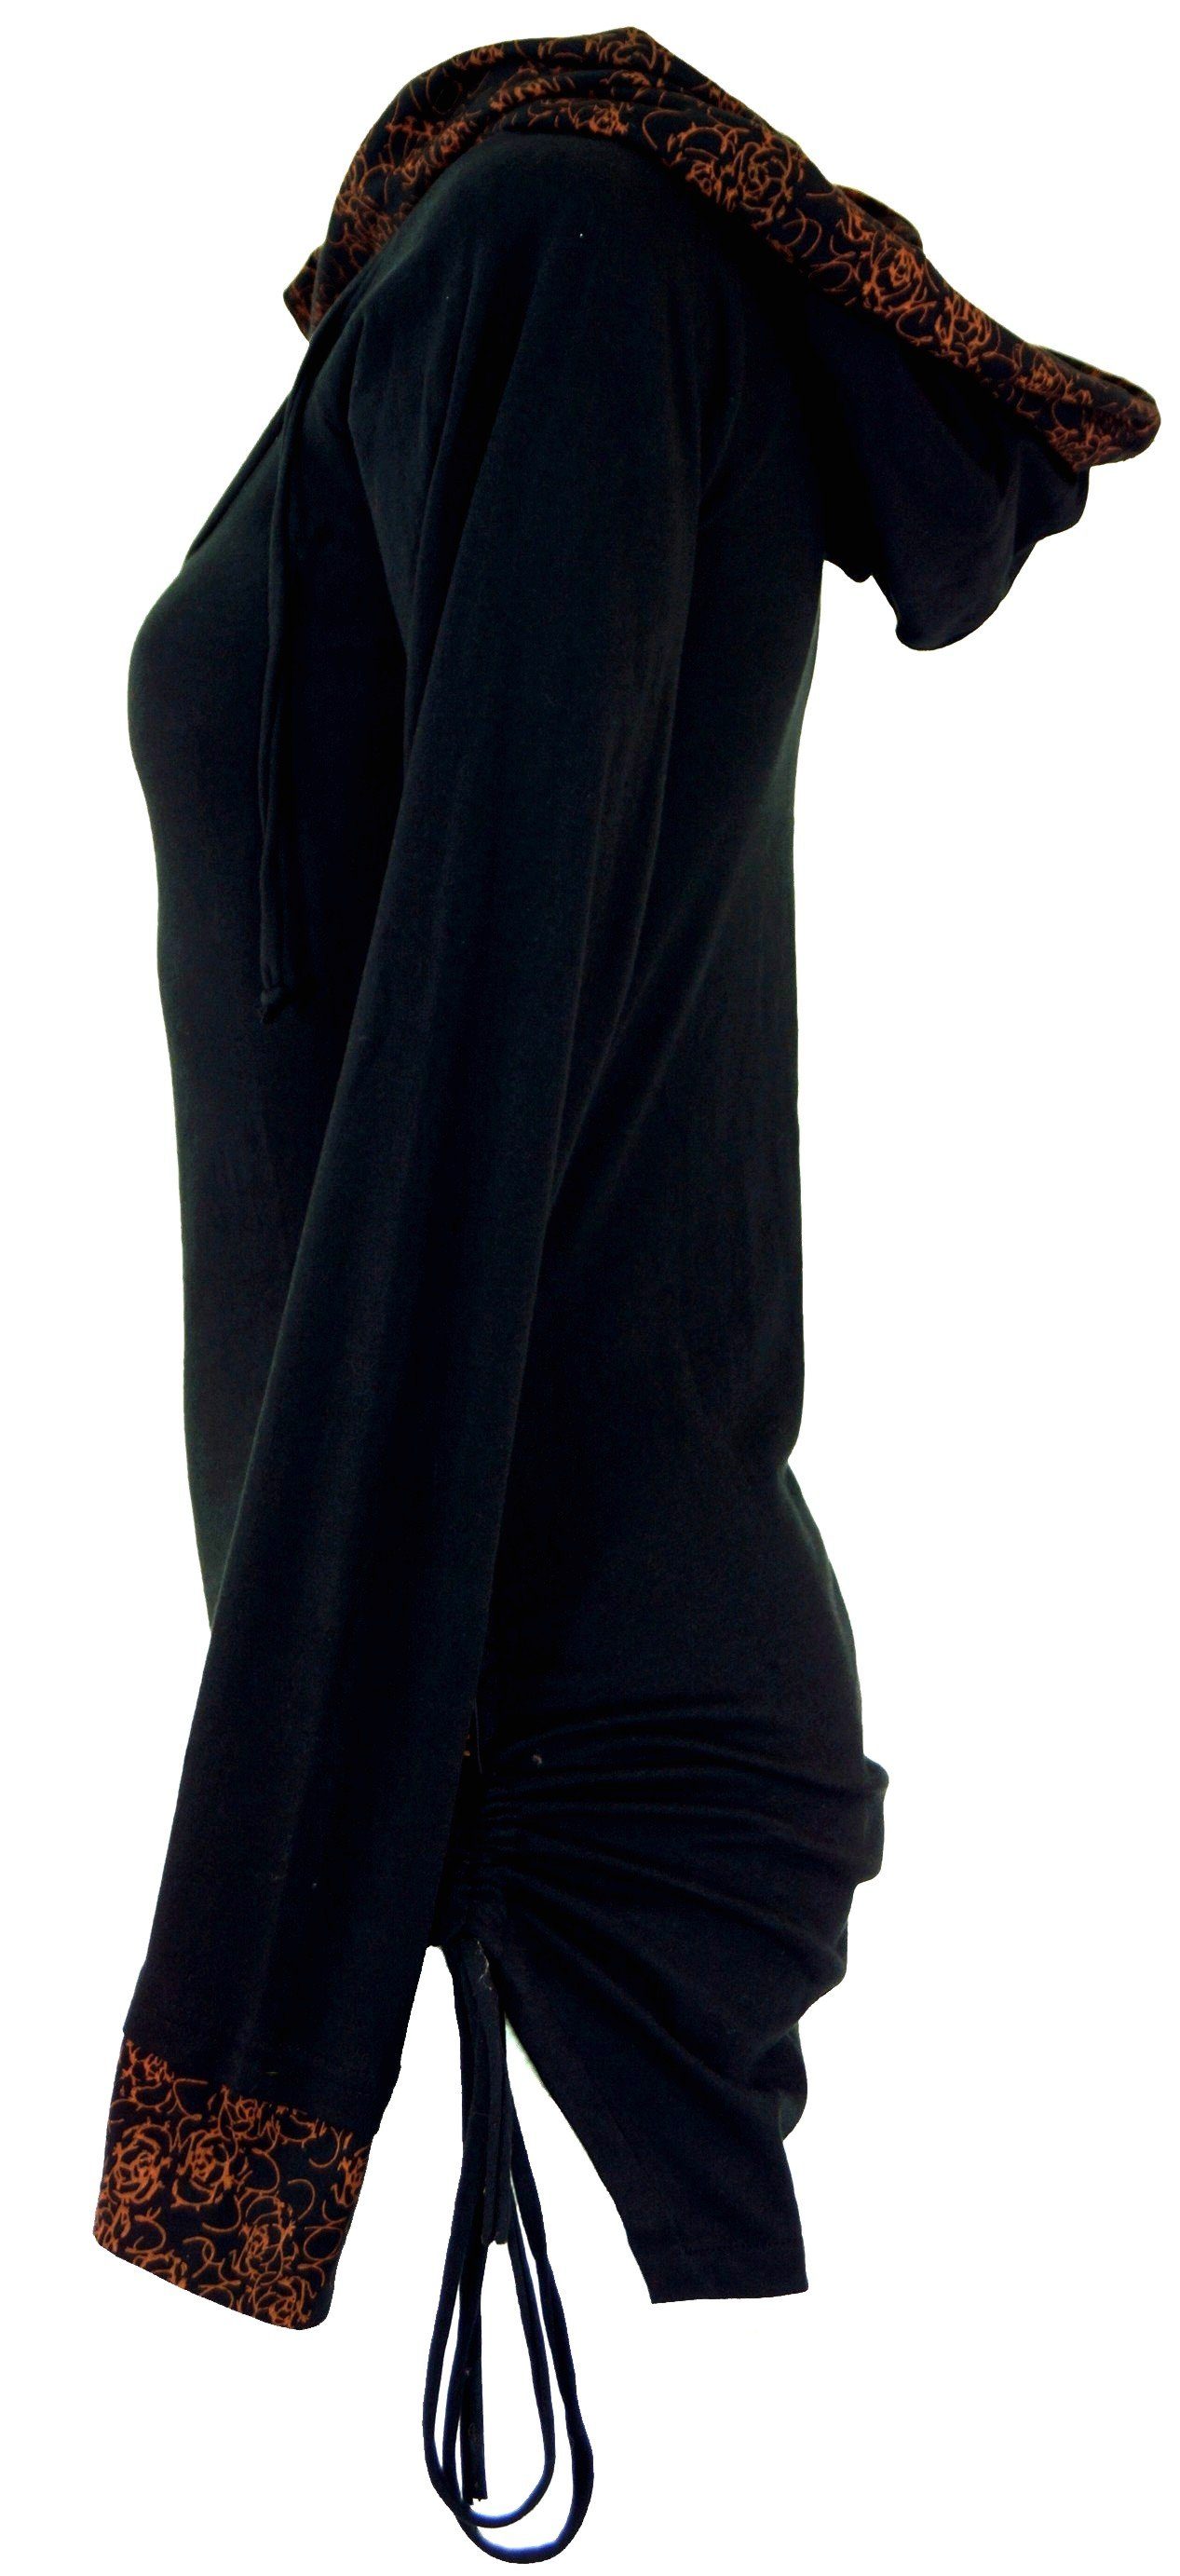 Bekleidung Longsleeve Boho aus Bio-Baumwolle, Guru-Shop Longshirt Shirt.. alternative schwarz/orange